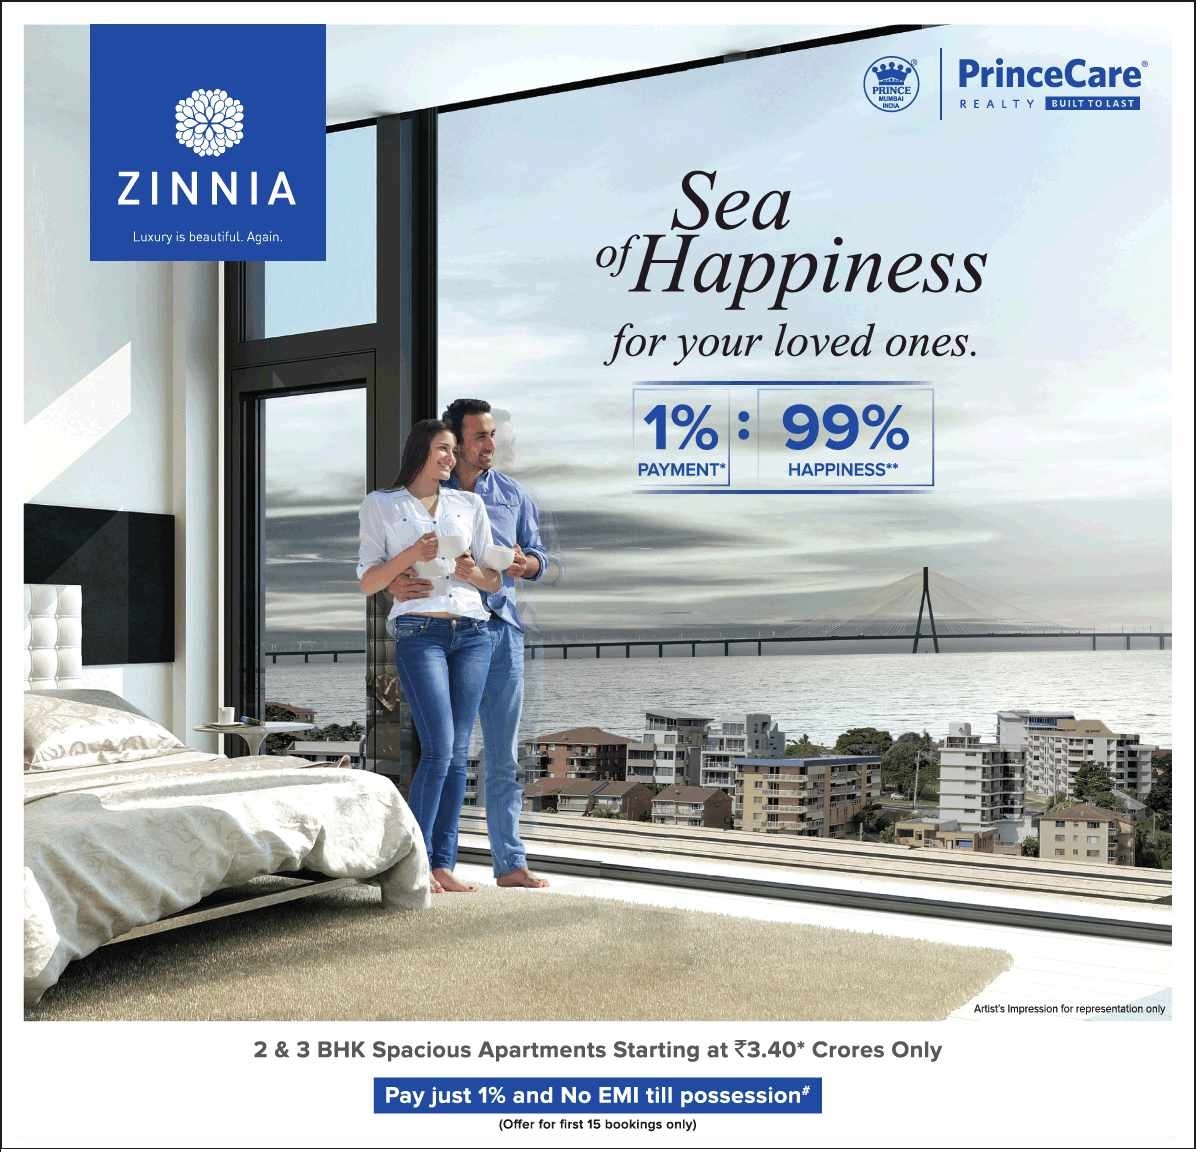 Book 2 & 3 bhk spacious apartments at Prince Care Zinnia in Mumbai Update